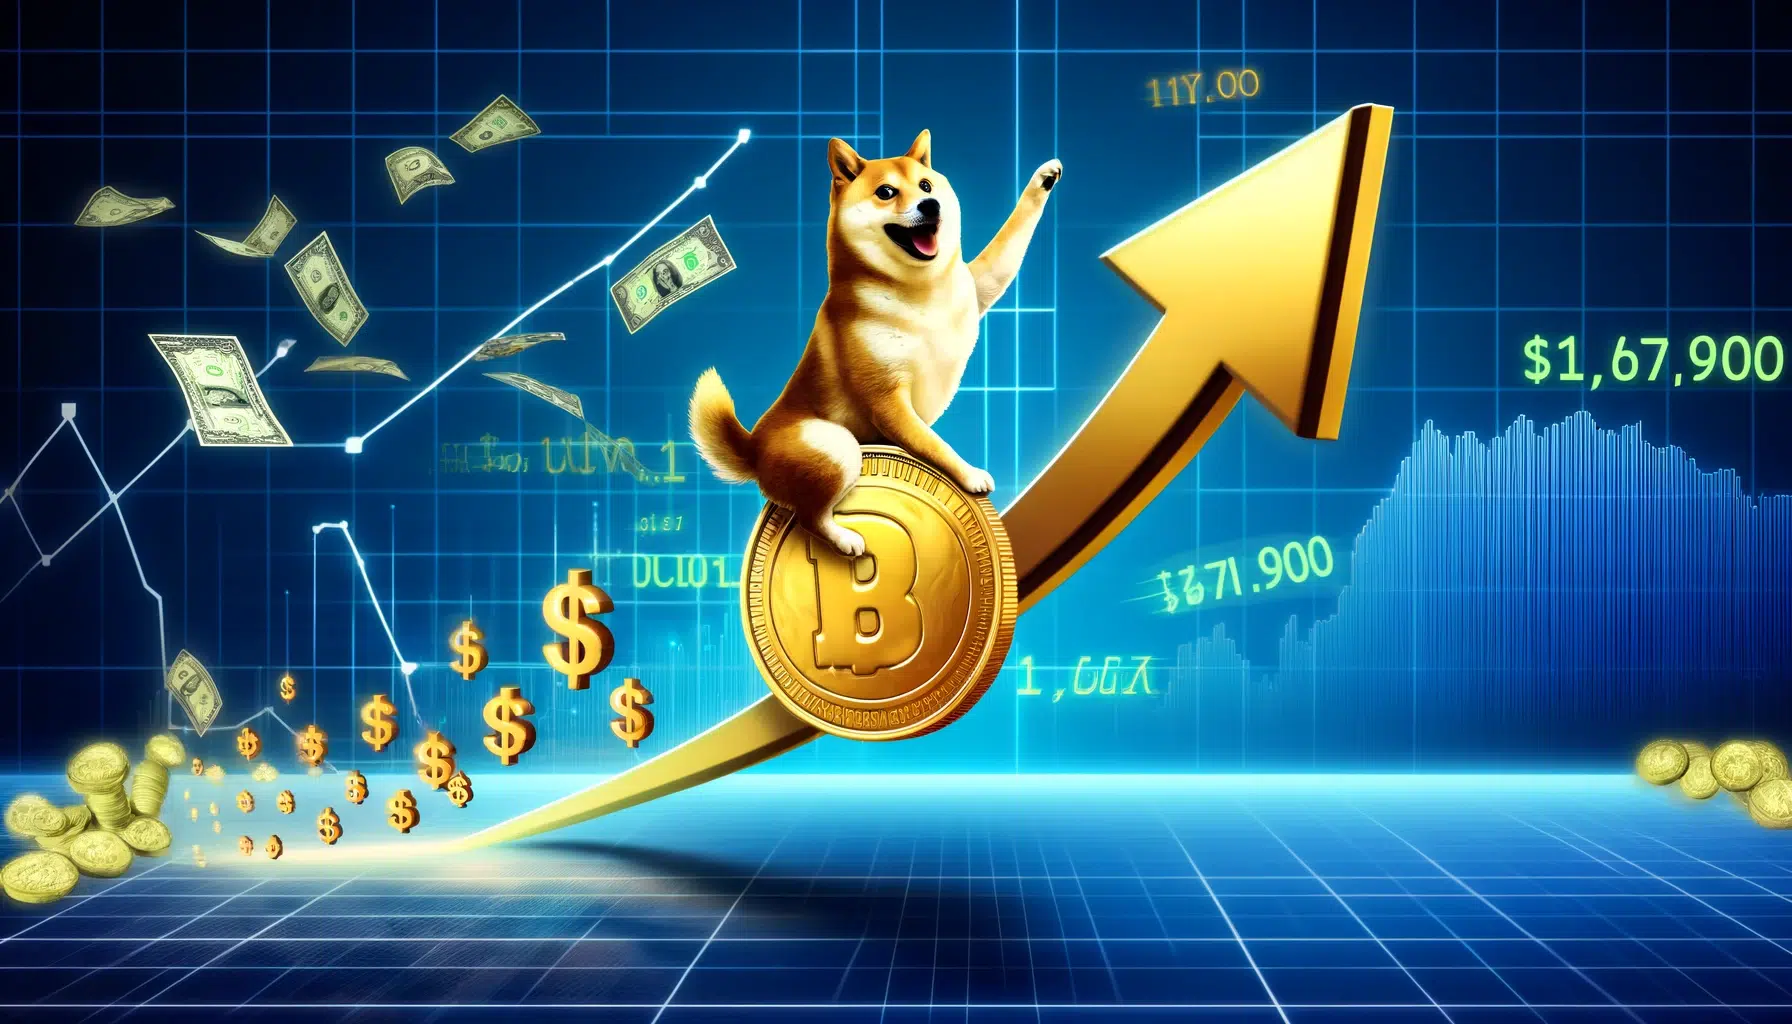 Dogecoin Bull Run Ahead? Analyst Forecasts Massive 1,500% Price Increase